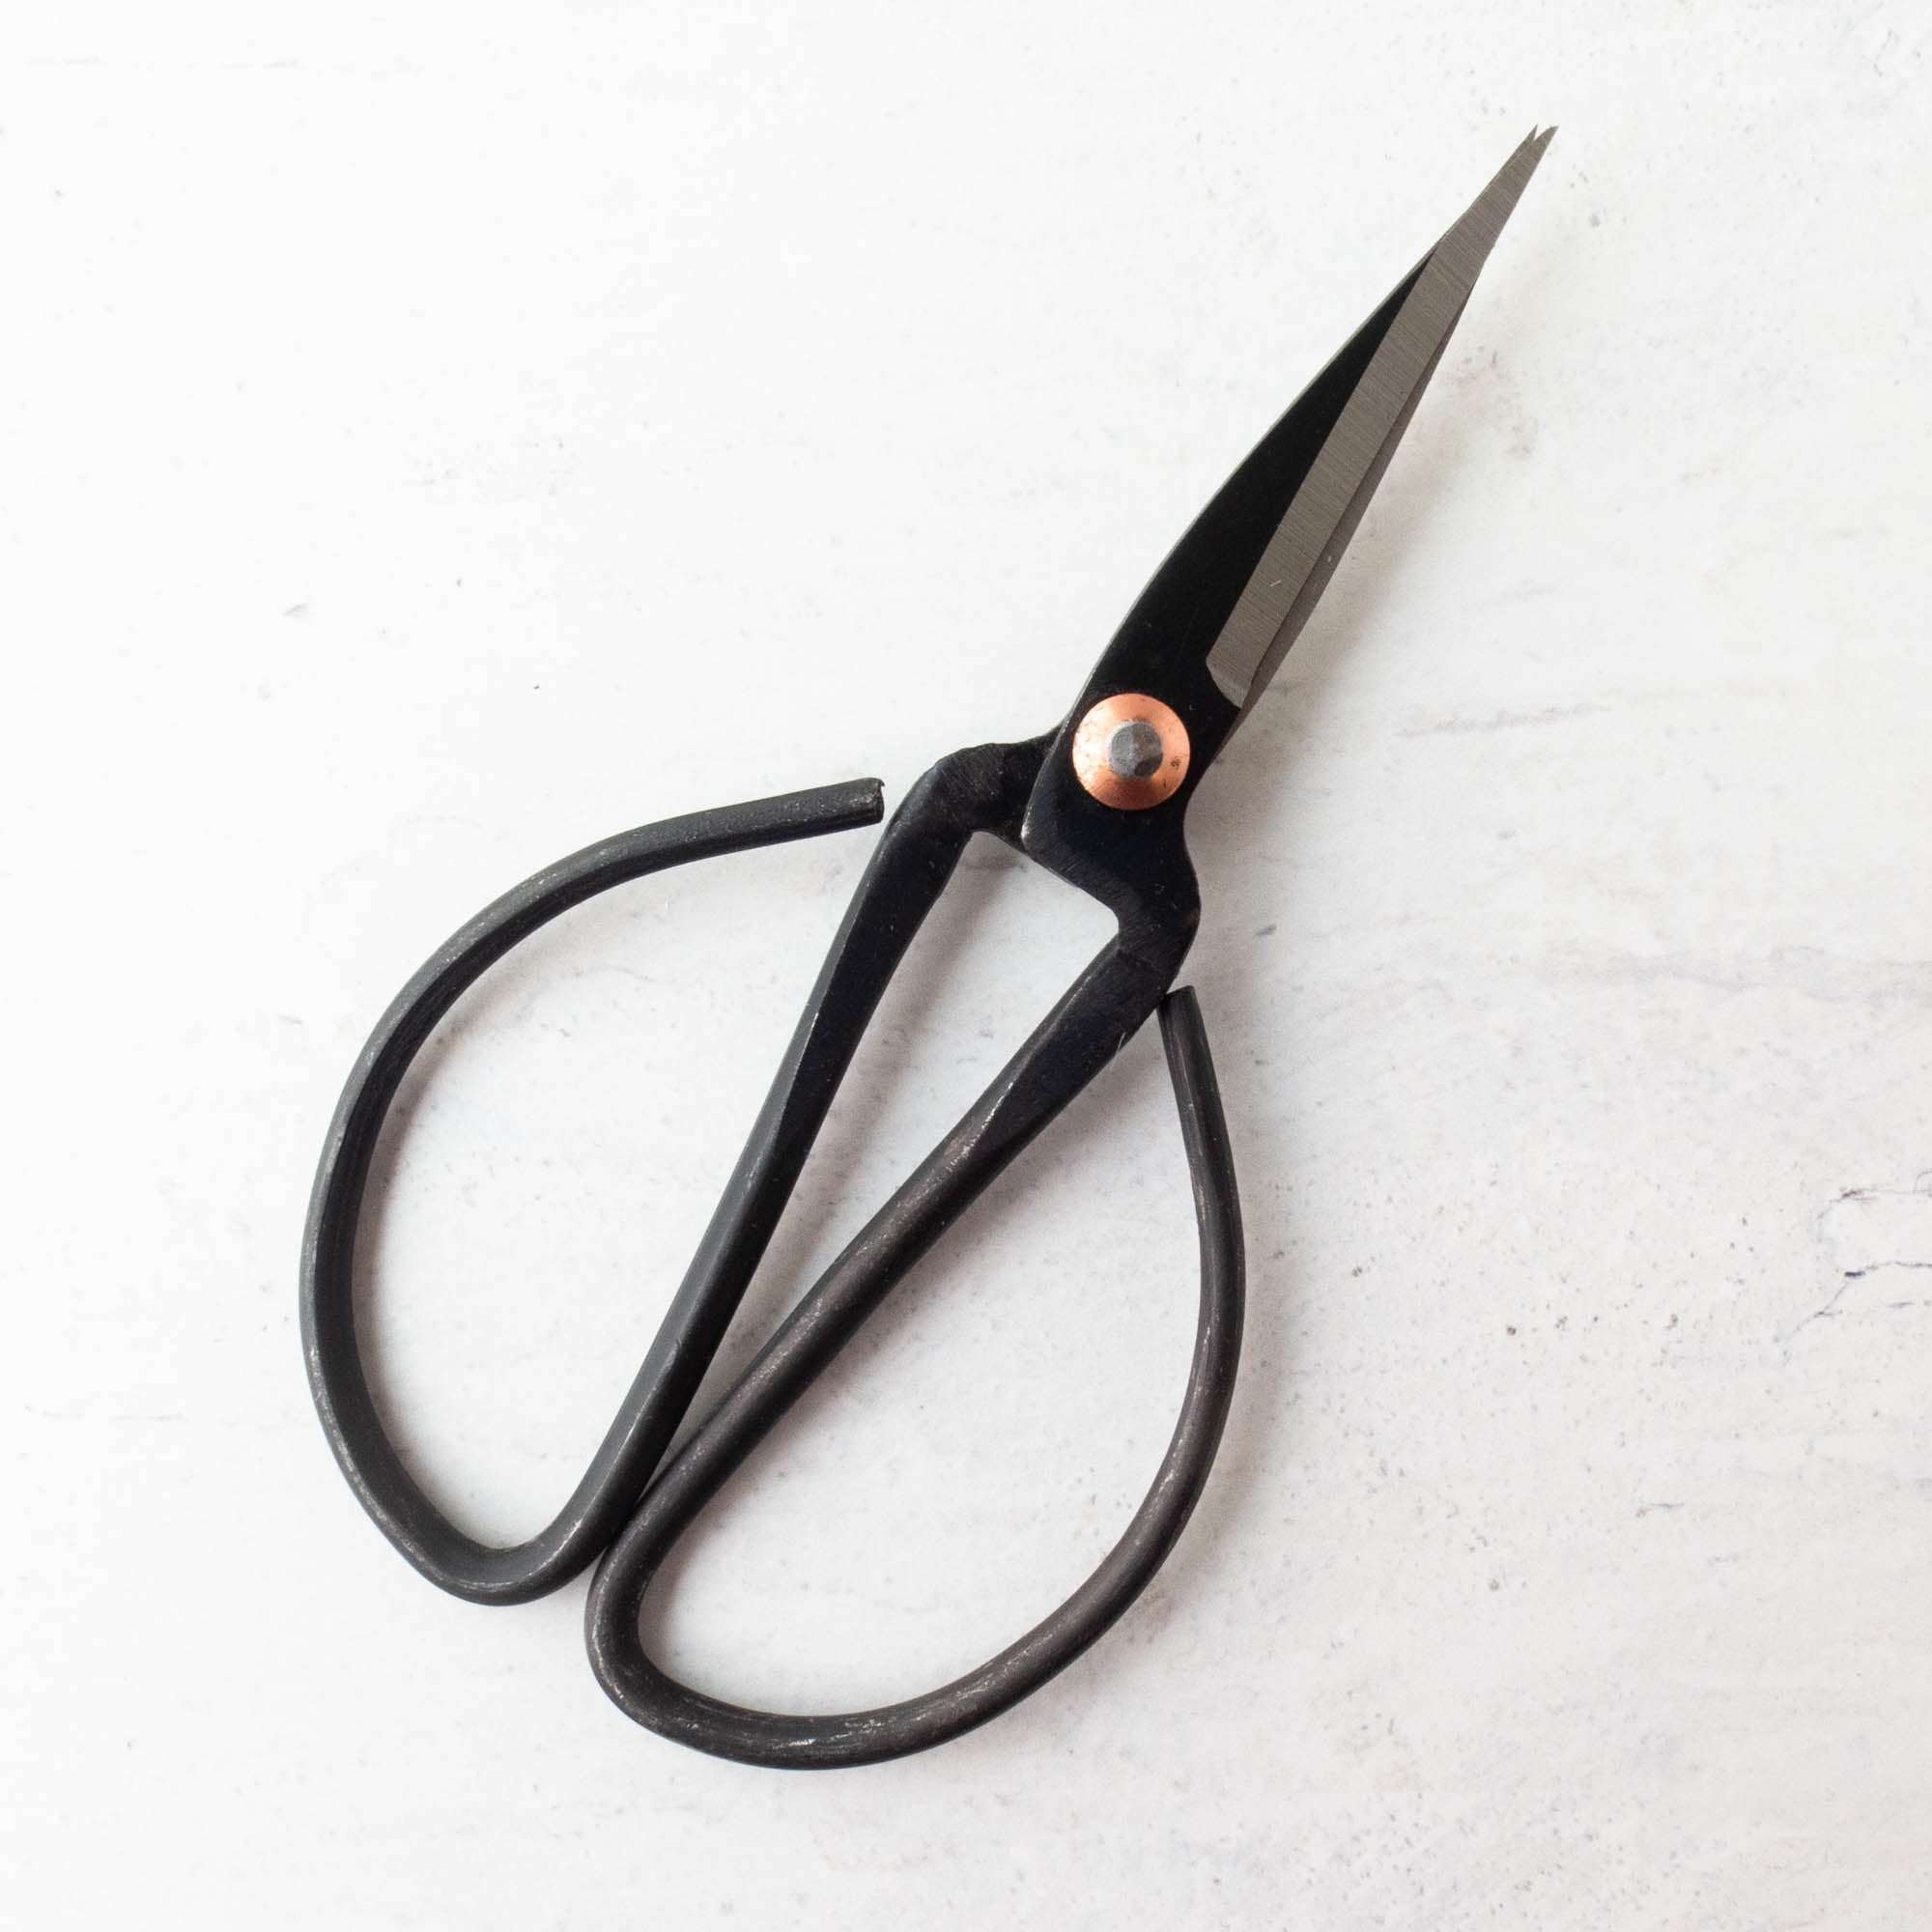 Sewing Scissors / Sharp Scissors / Bonsai Scissors 